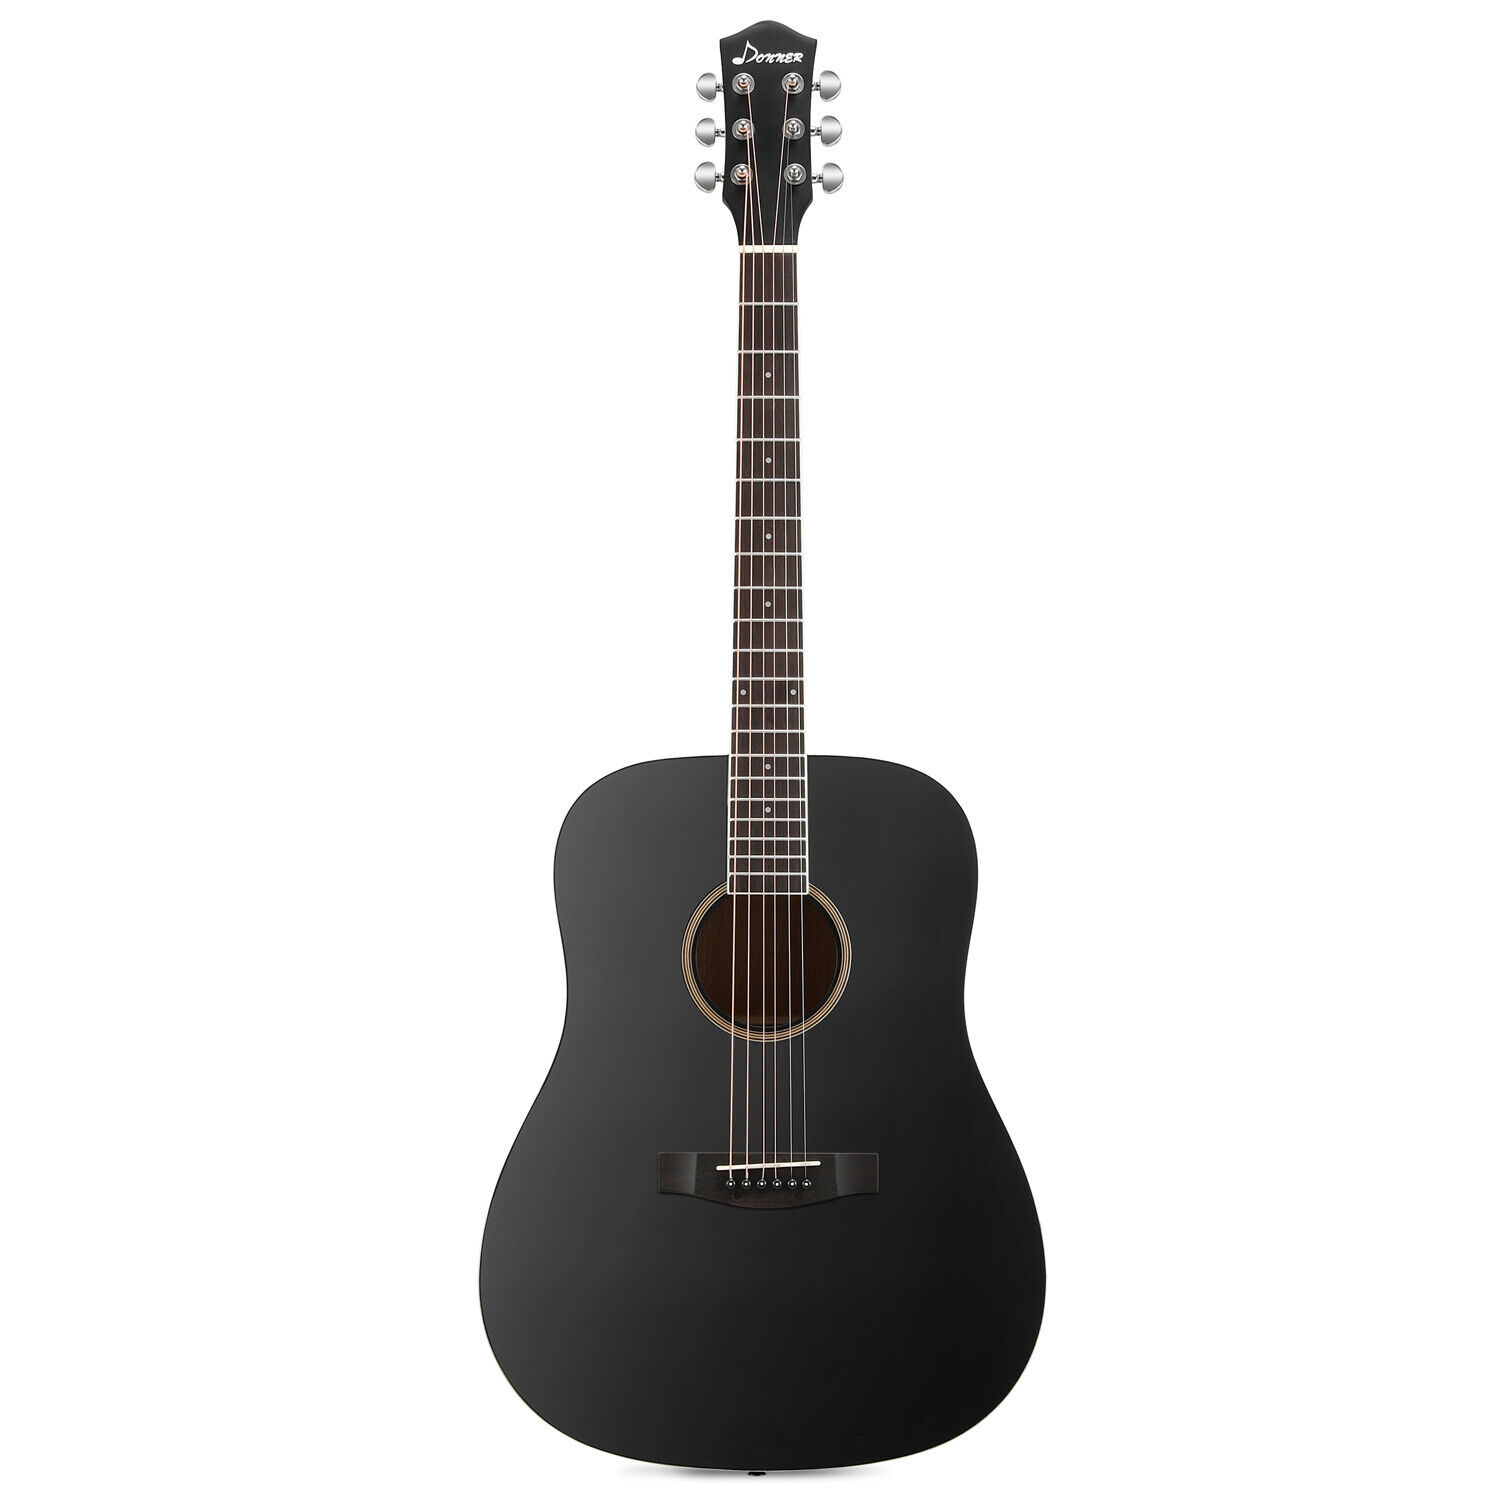 Donner DAG-1B Acoustic Guitar Full Size 41″ Cutaway Mahogany +Bag Strap | Refurb 11